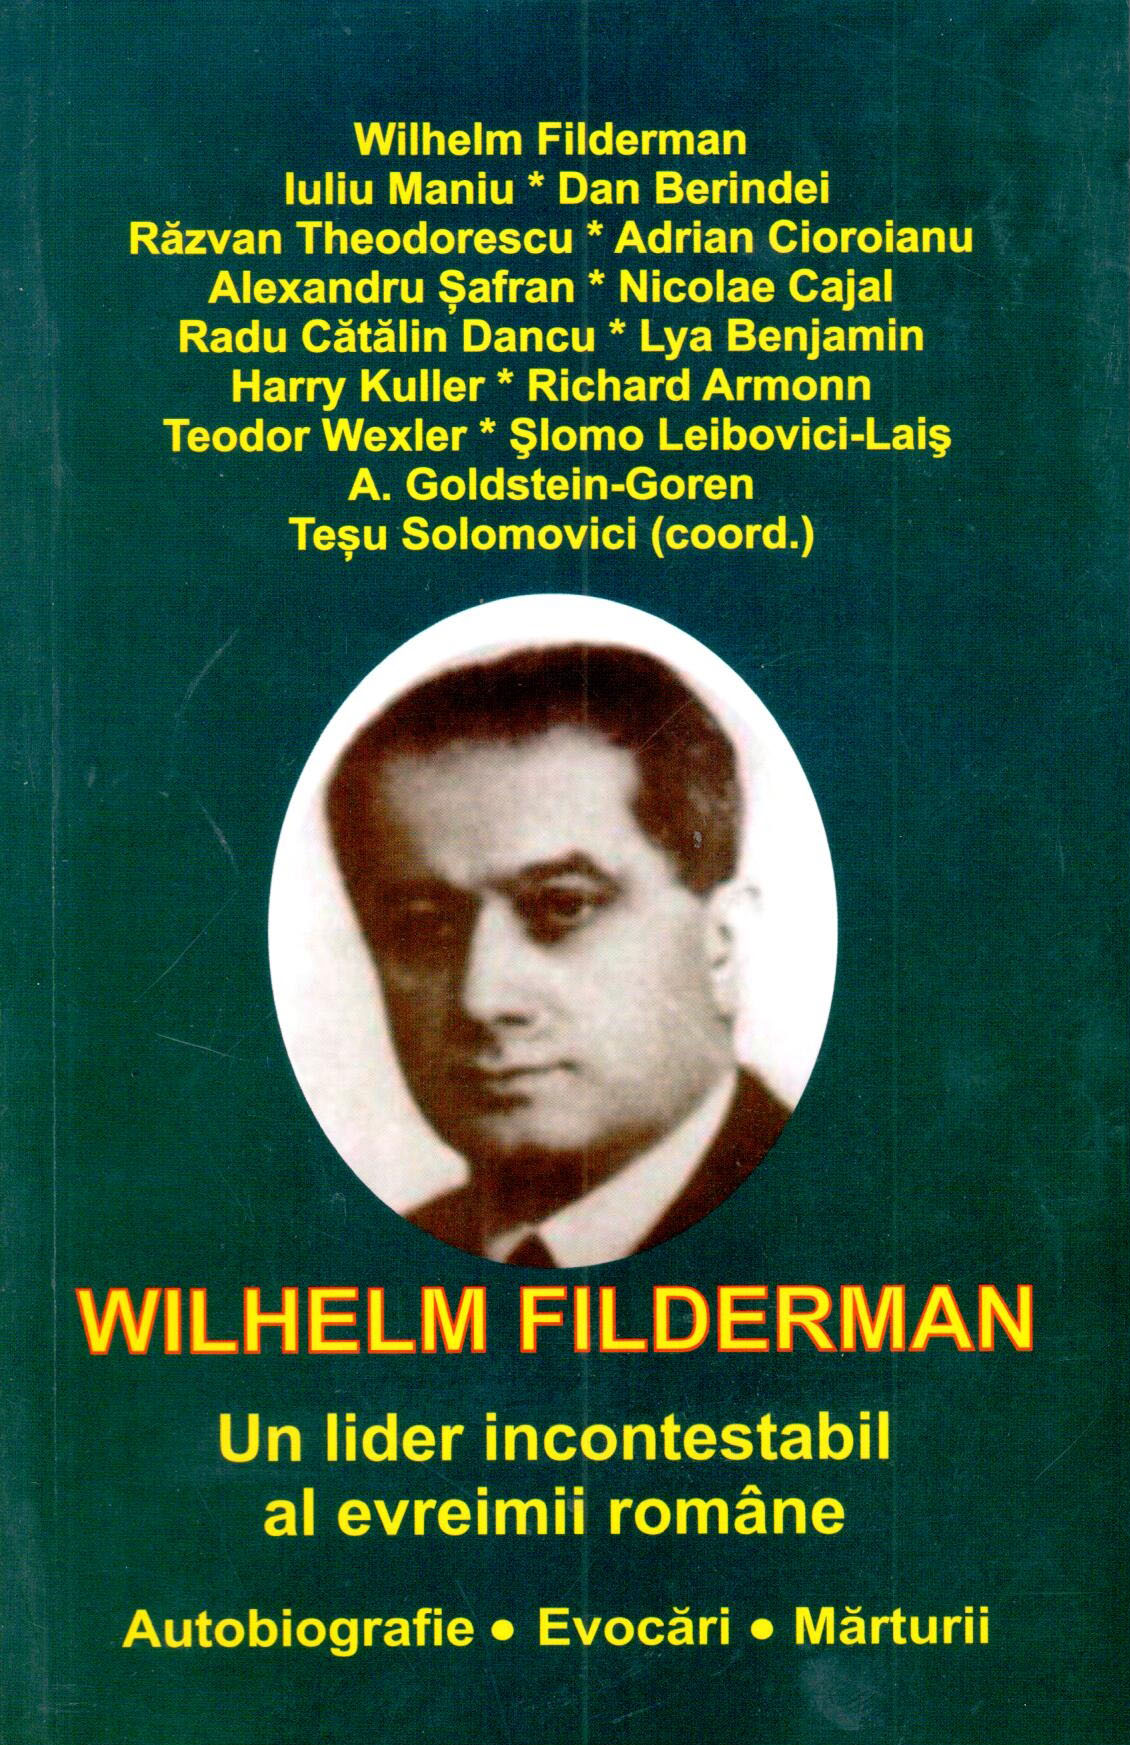 Wilhelm Filderman | Tesu Solomovici Biografii imagine 2022